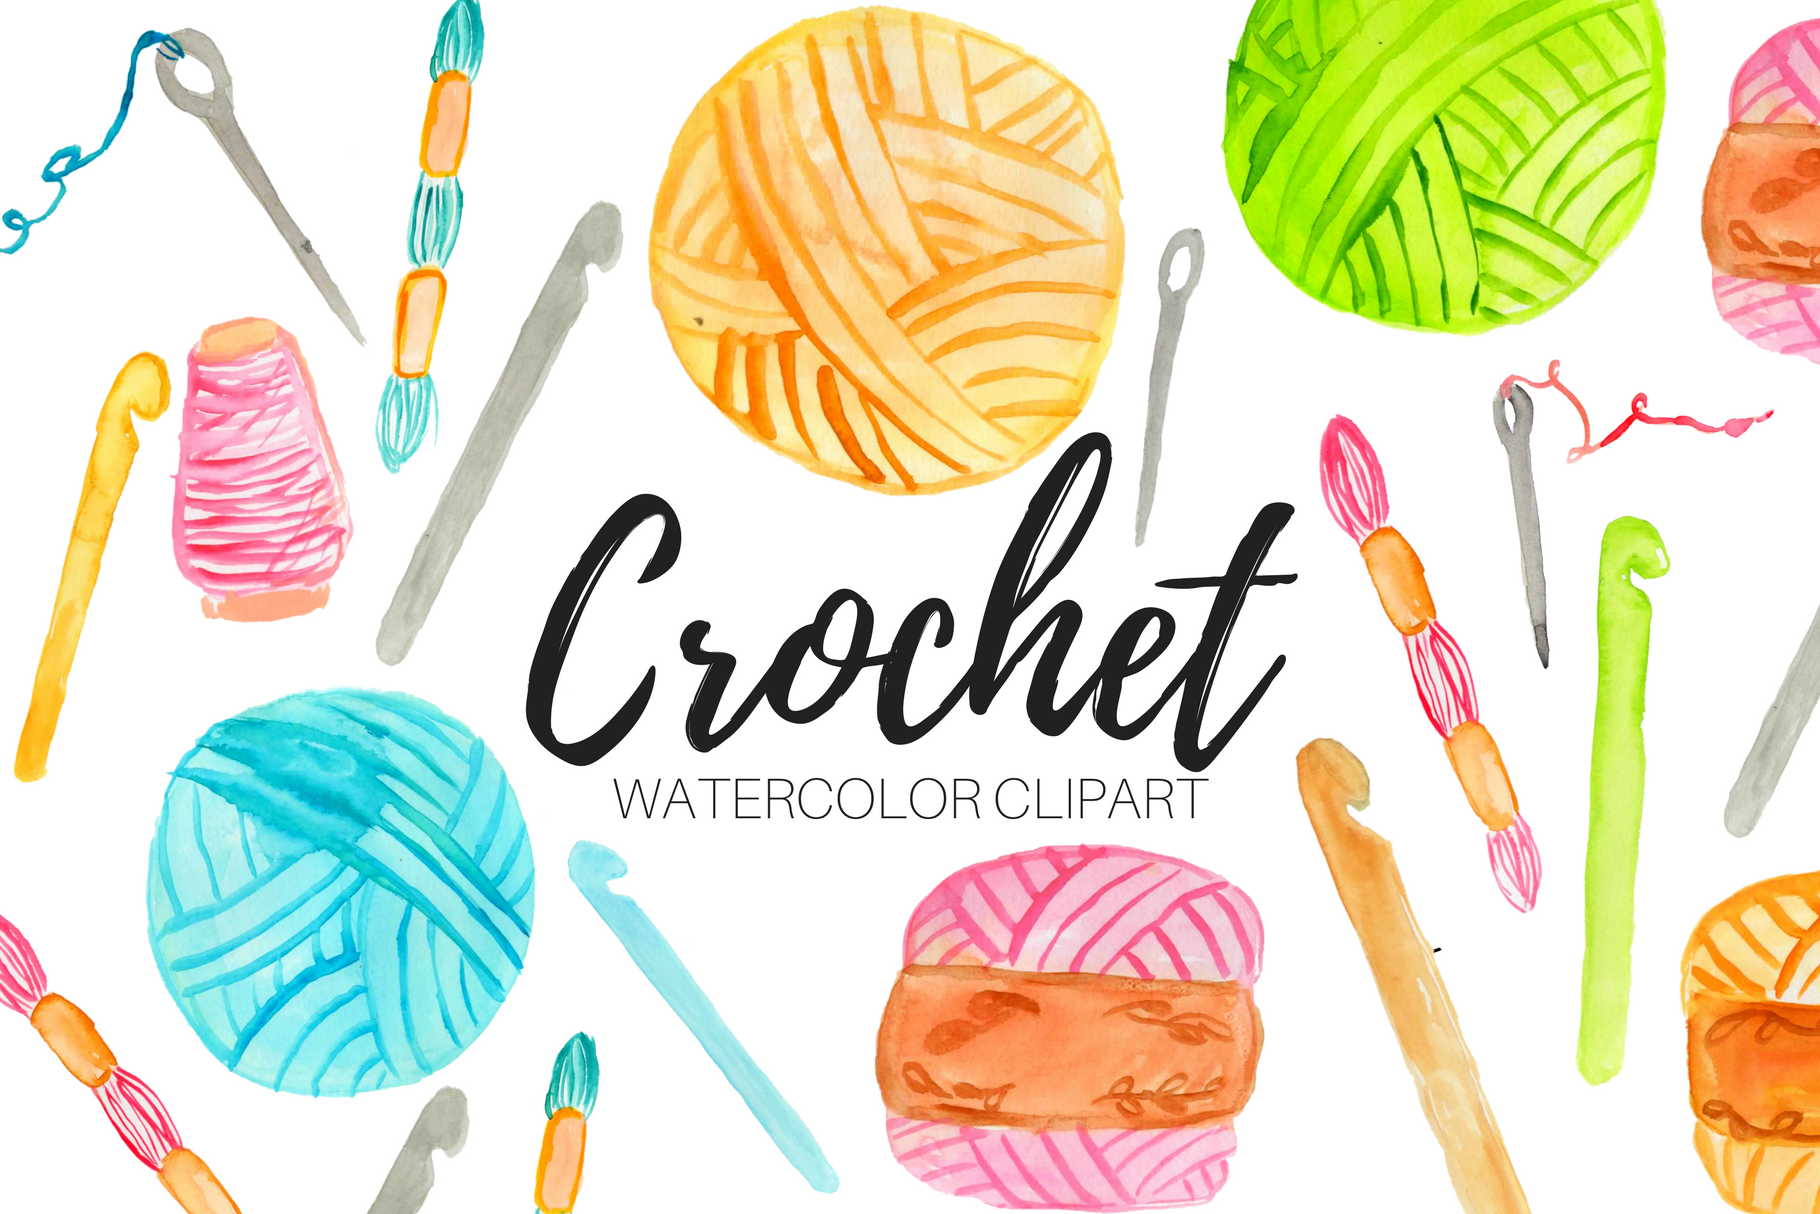 Watercolor Crochet Clipart ~ Illustrations ~ Creative Market